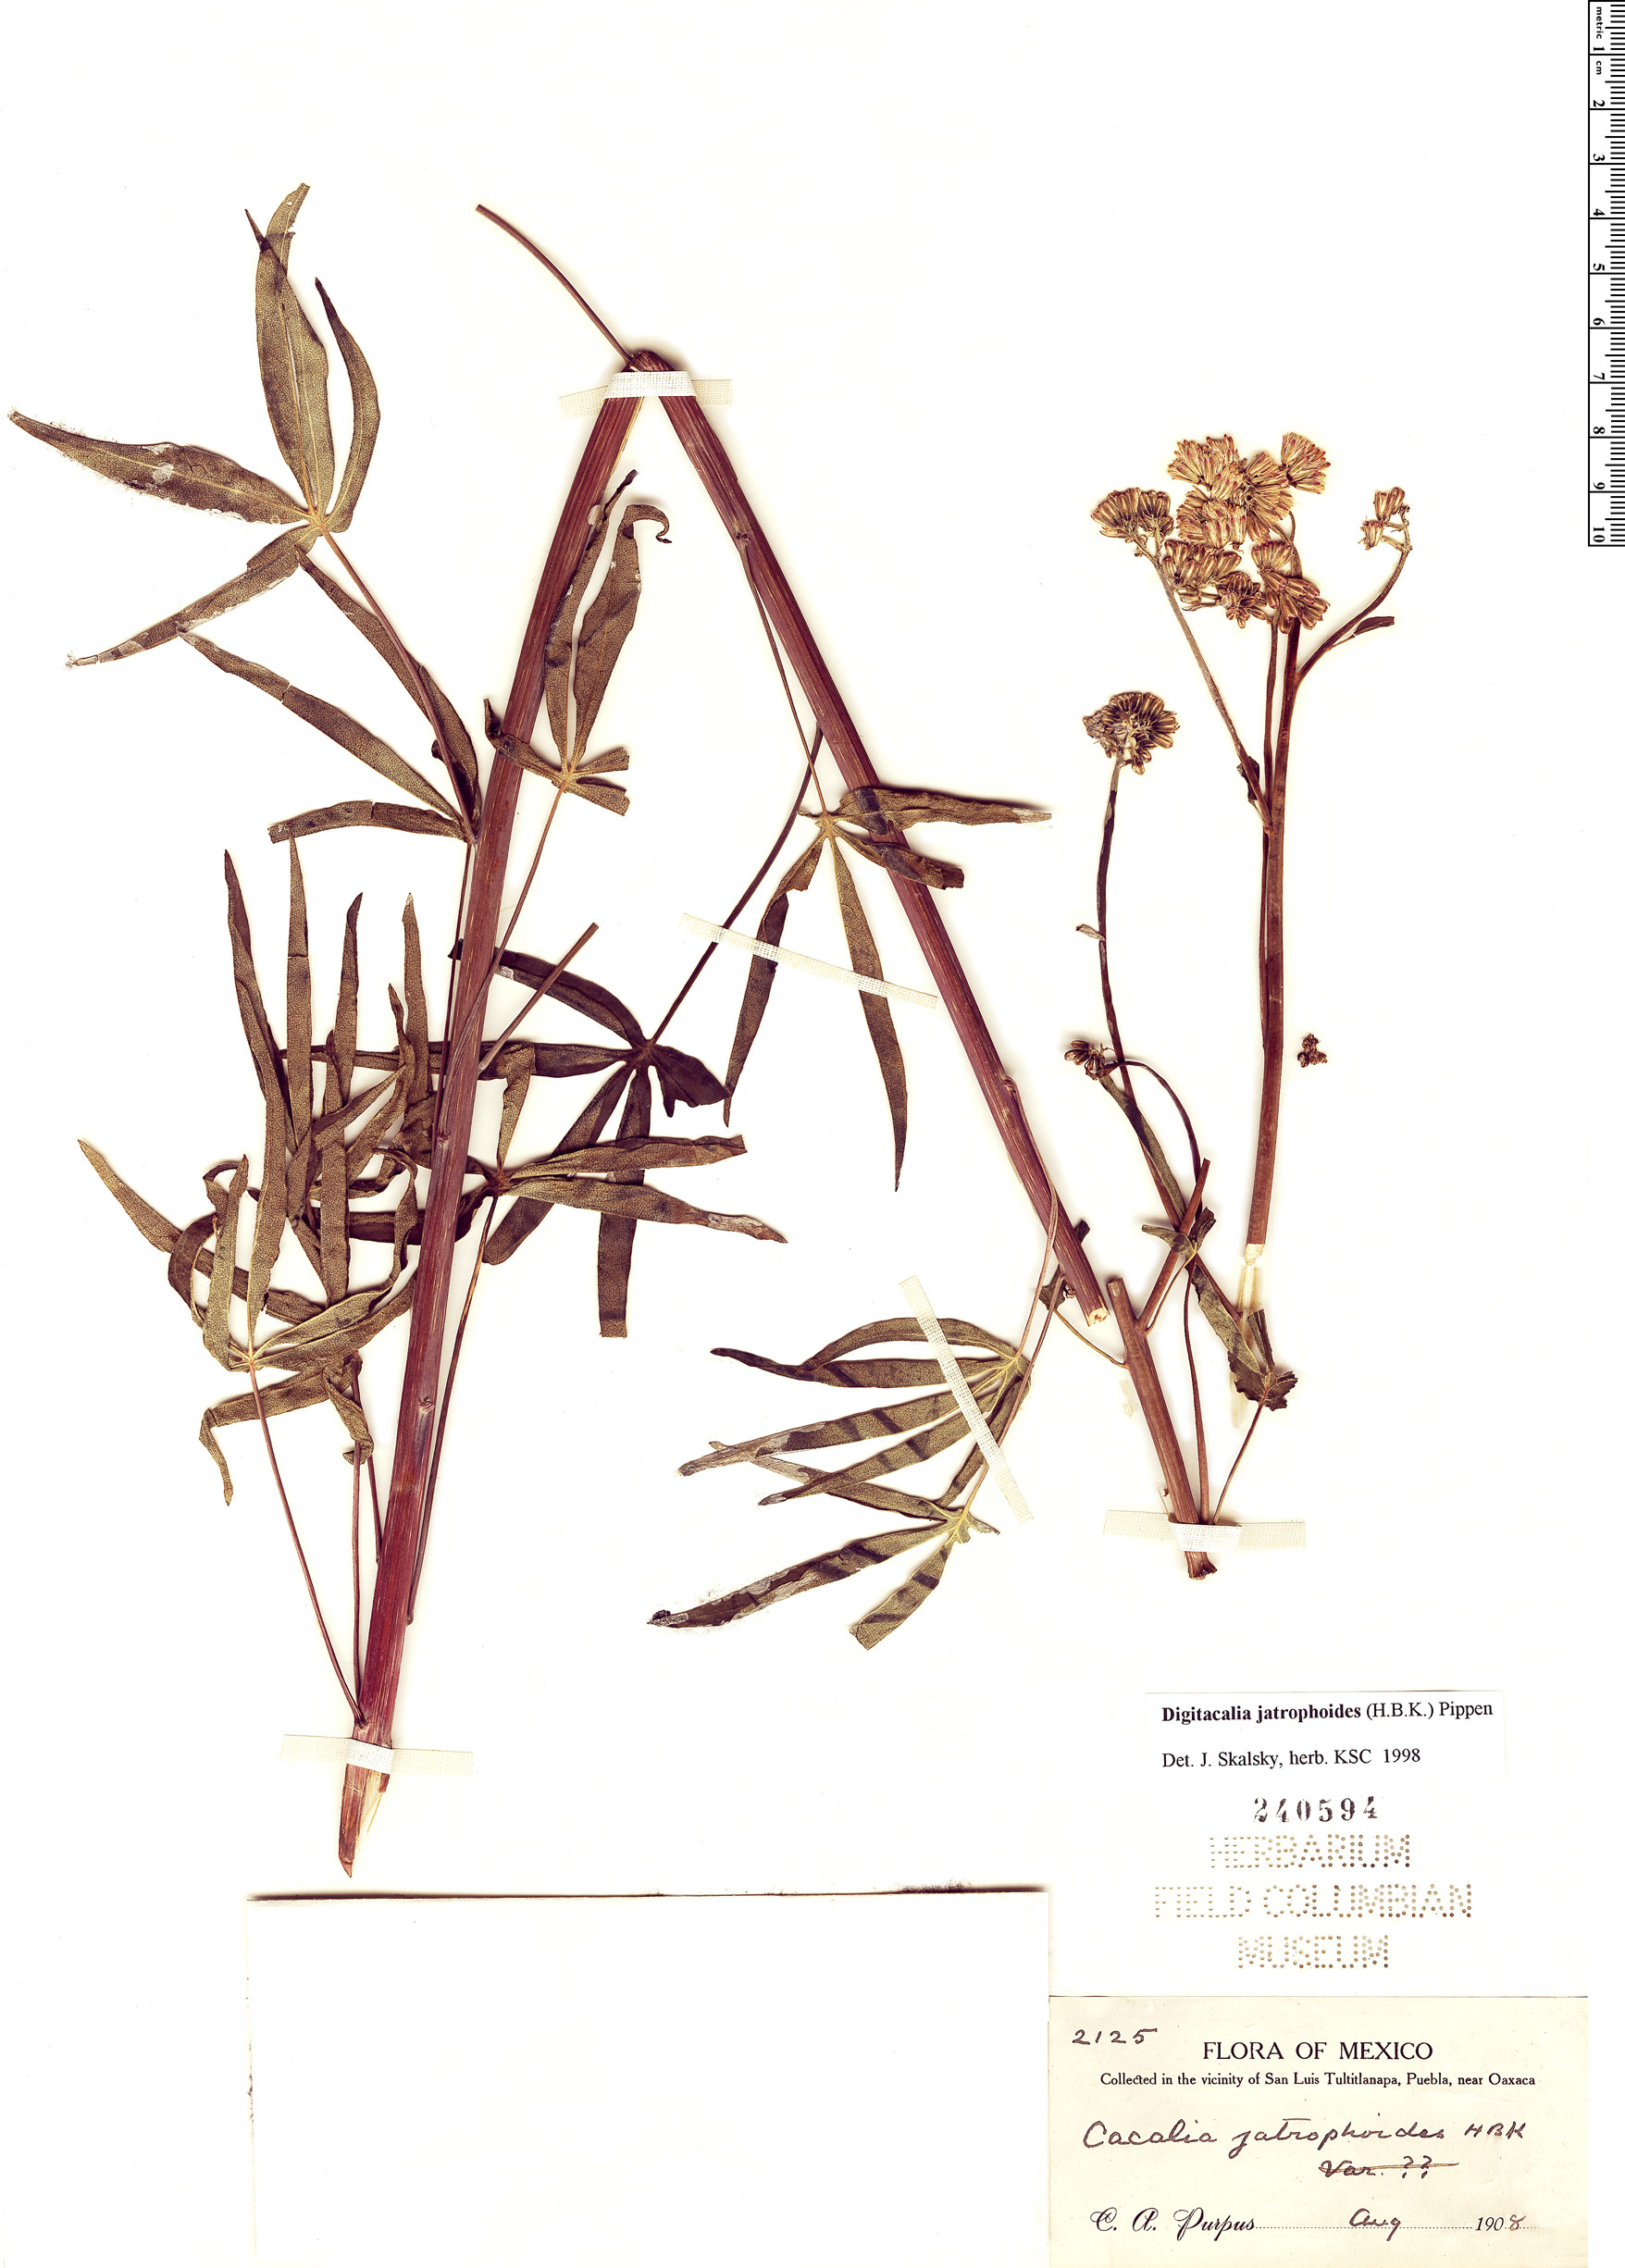 Digitacalia jatrophoides image